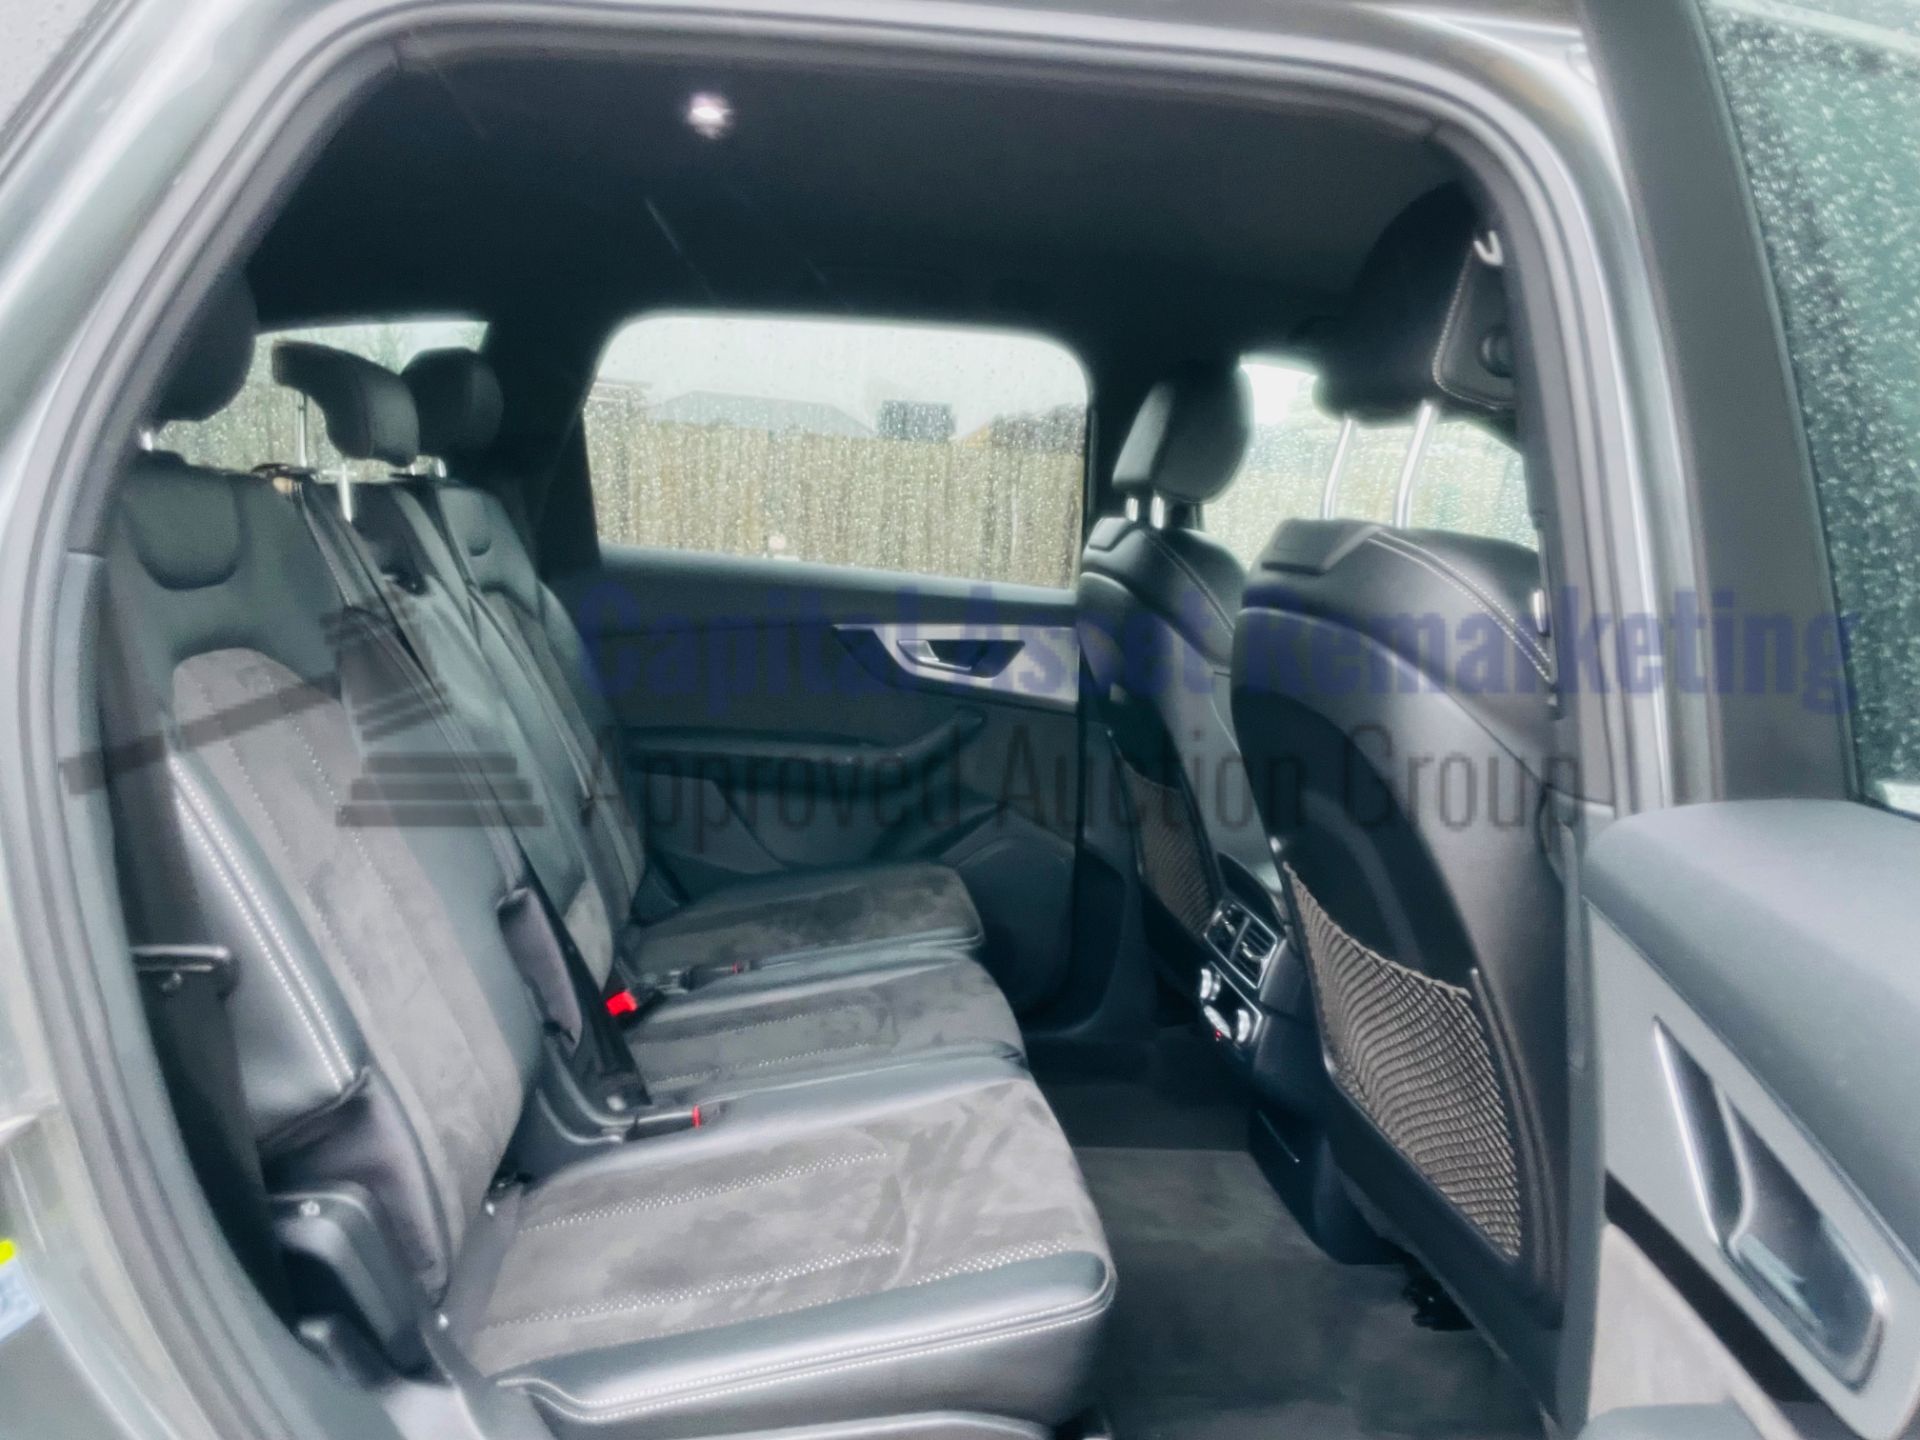 (On Sale) AUDI Q7 *S-LINE QUATTRO* 7 SEATER SUV (65 REG) '3.0 V6 TDI -272 BHP - AUTO' *FULLY LOADED* - Image 35 of 58